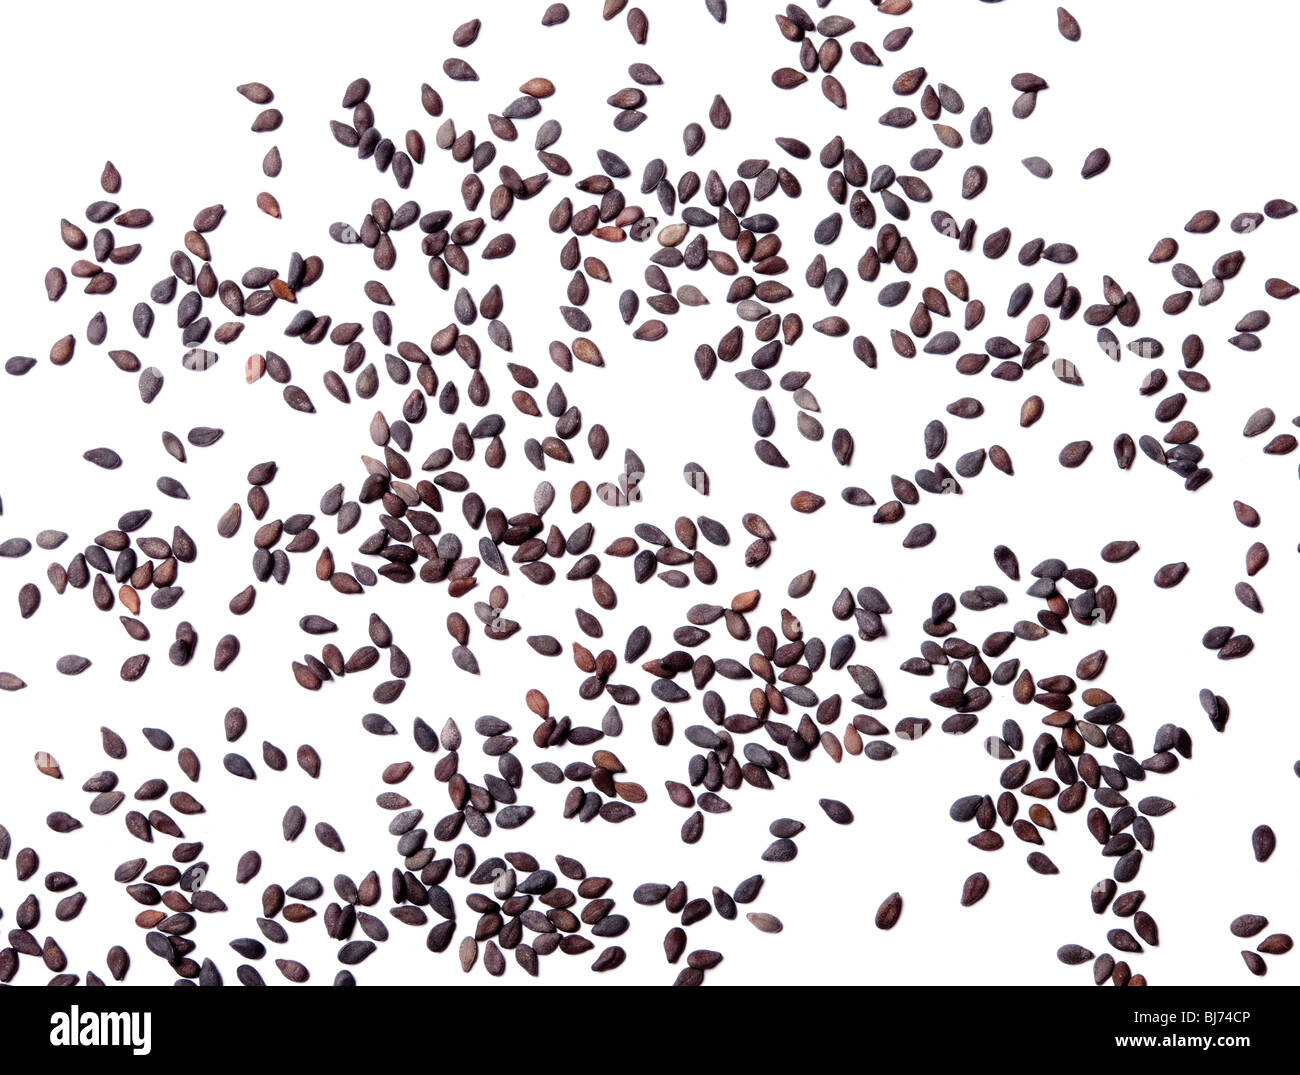 Blace sesame seeds on white background Stock Photo